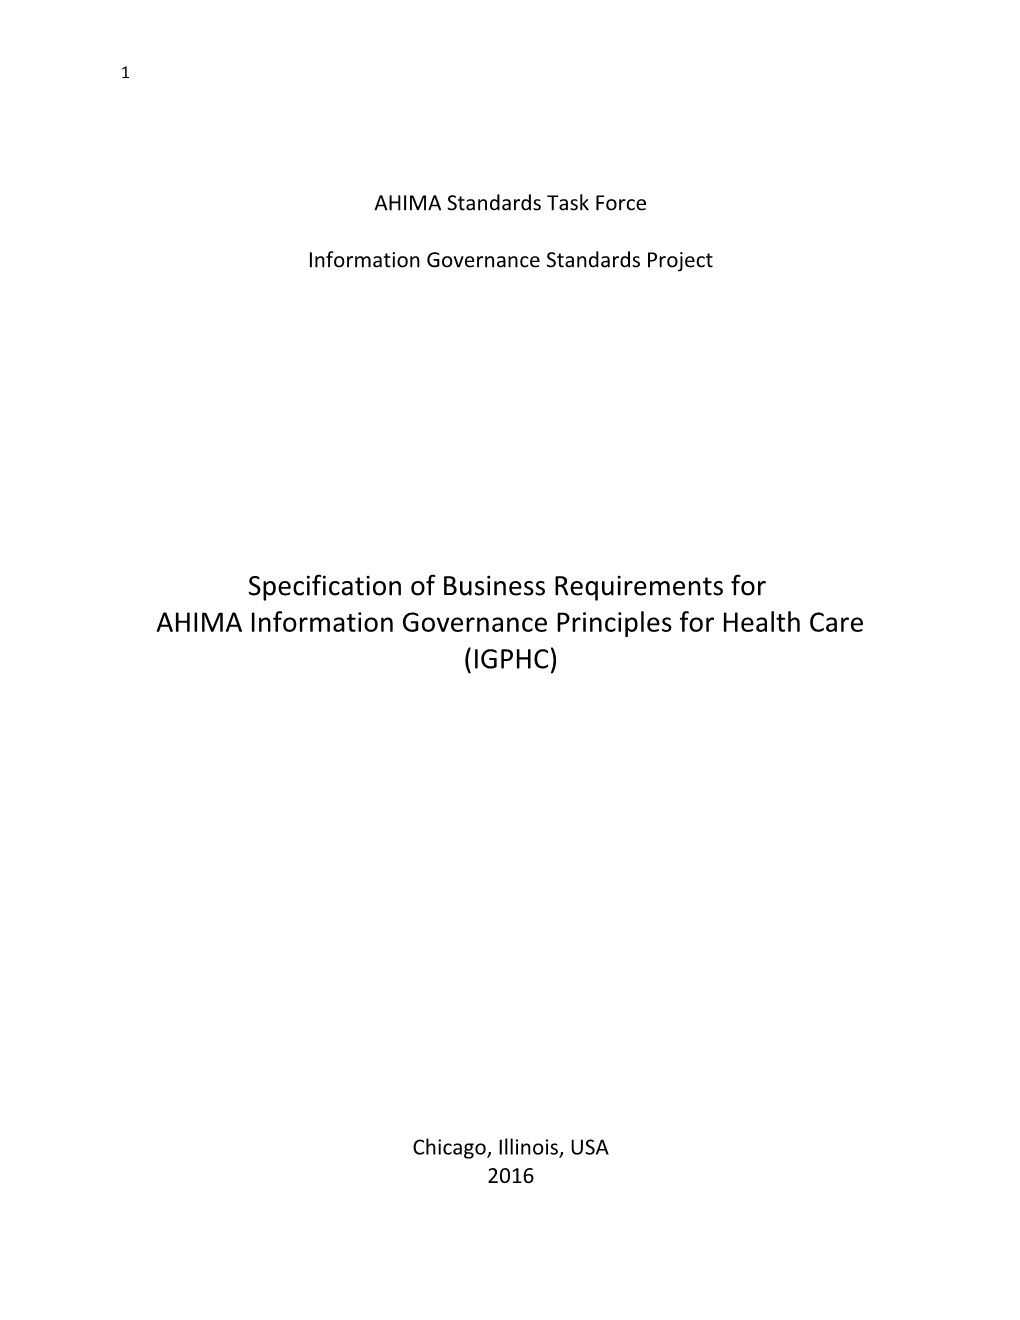 AHIMA Standards Task Force s1